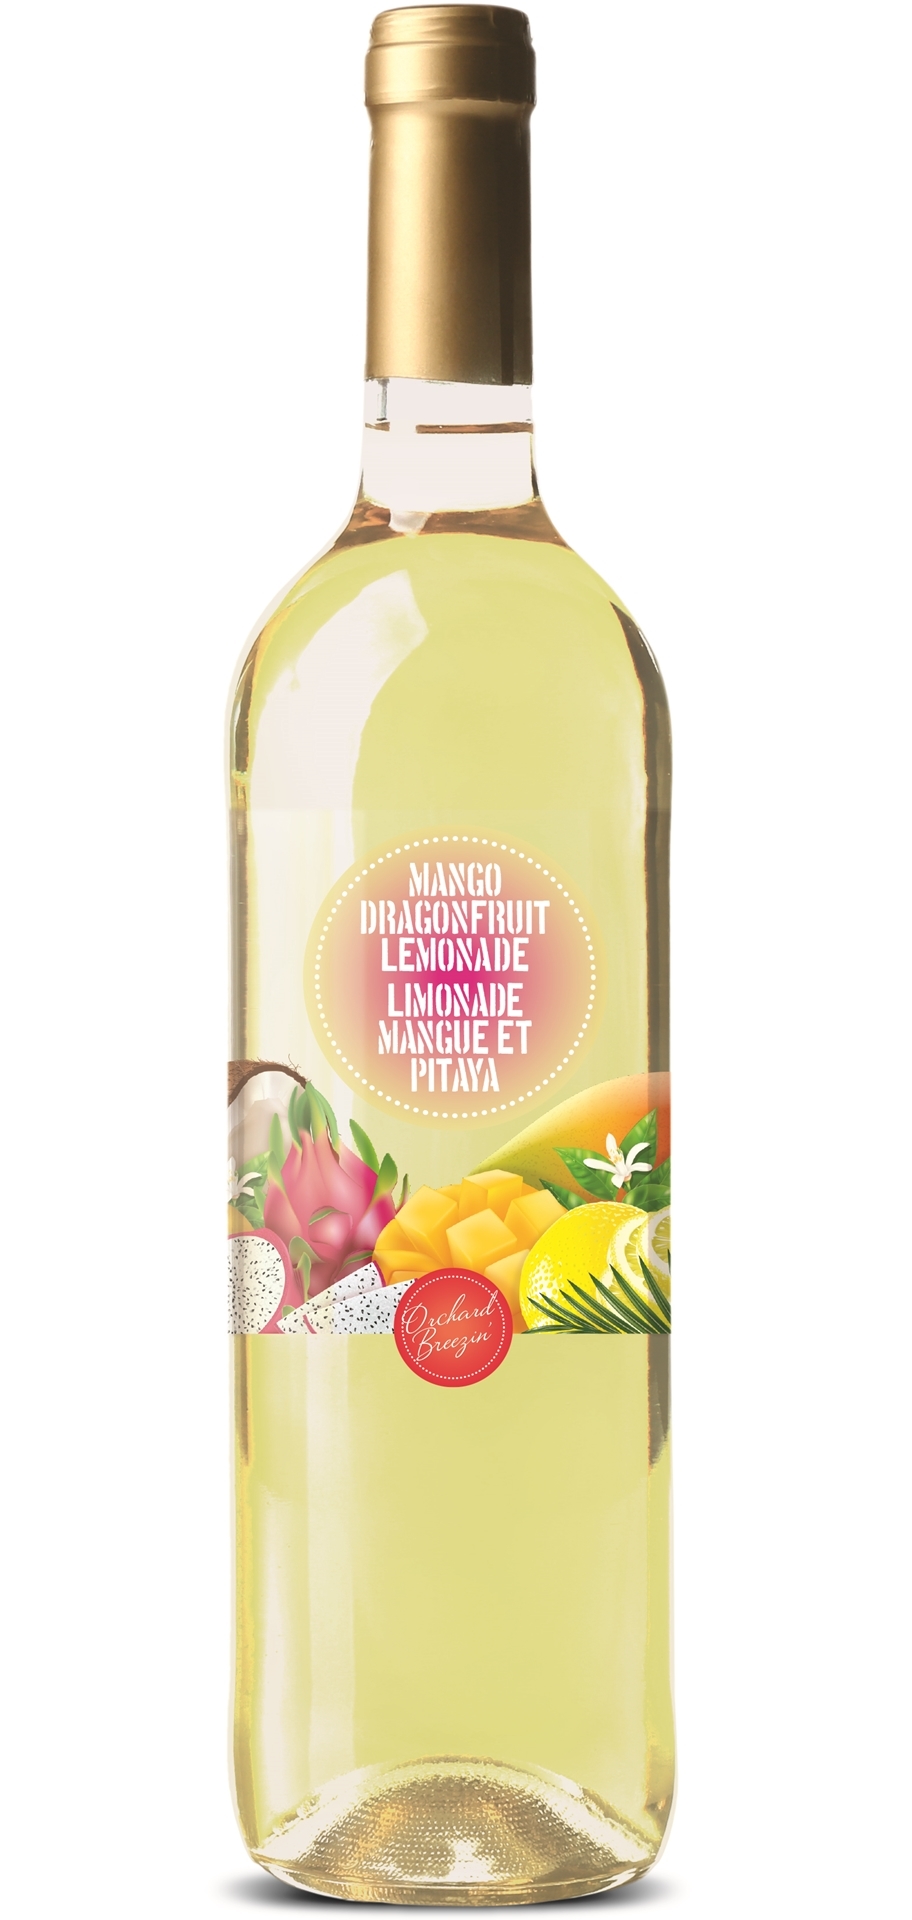 Picture of Orchard Breezin’ Mango Dragon Fruit Lemonade (case of 2)